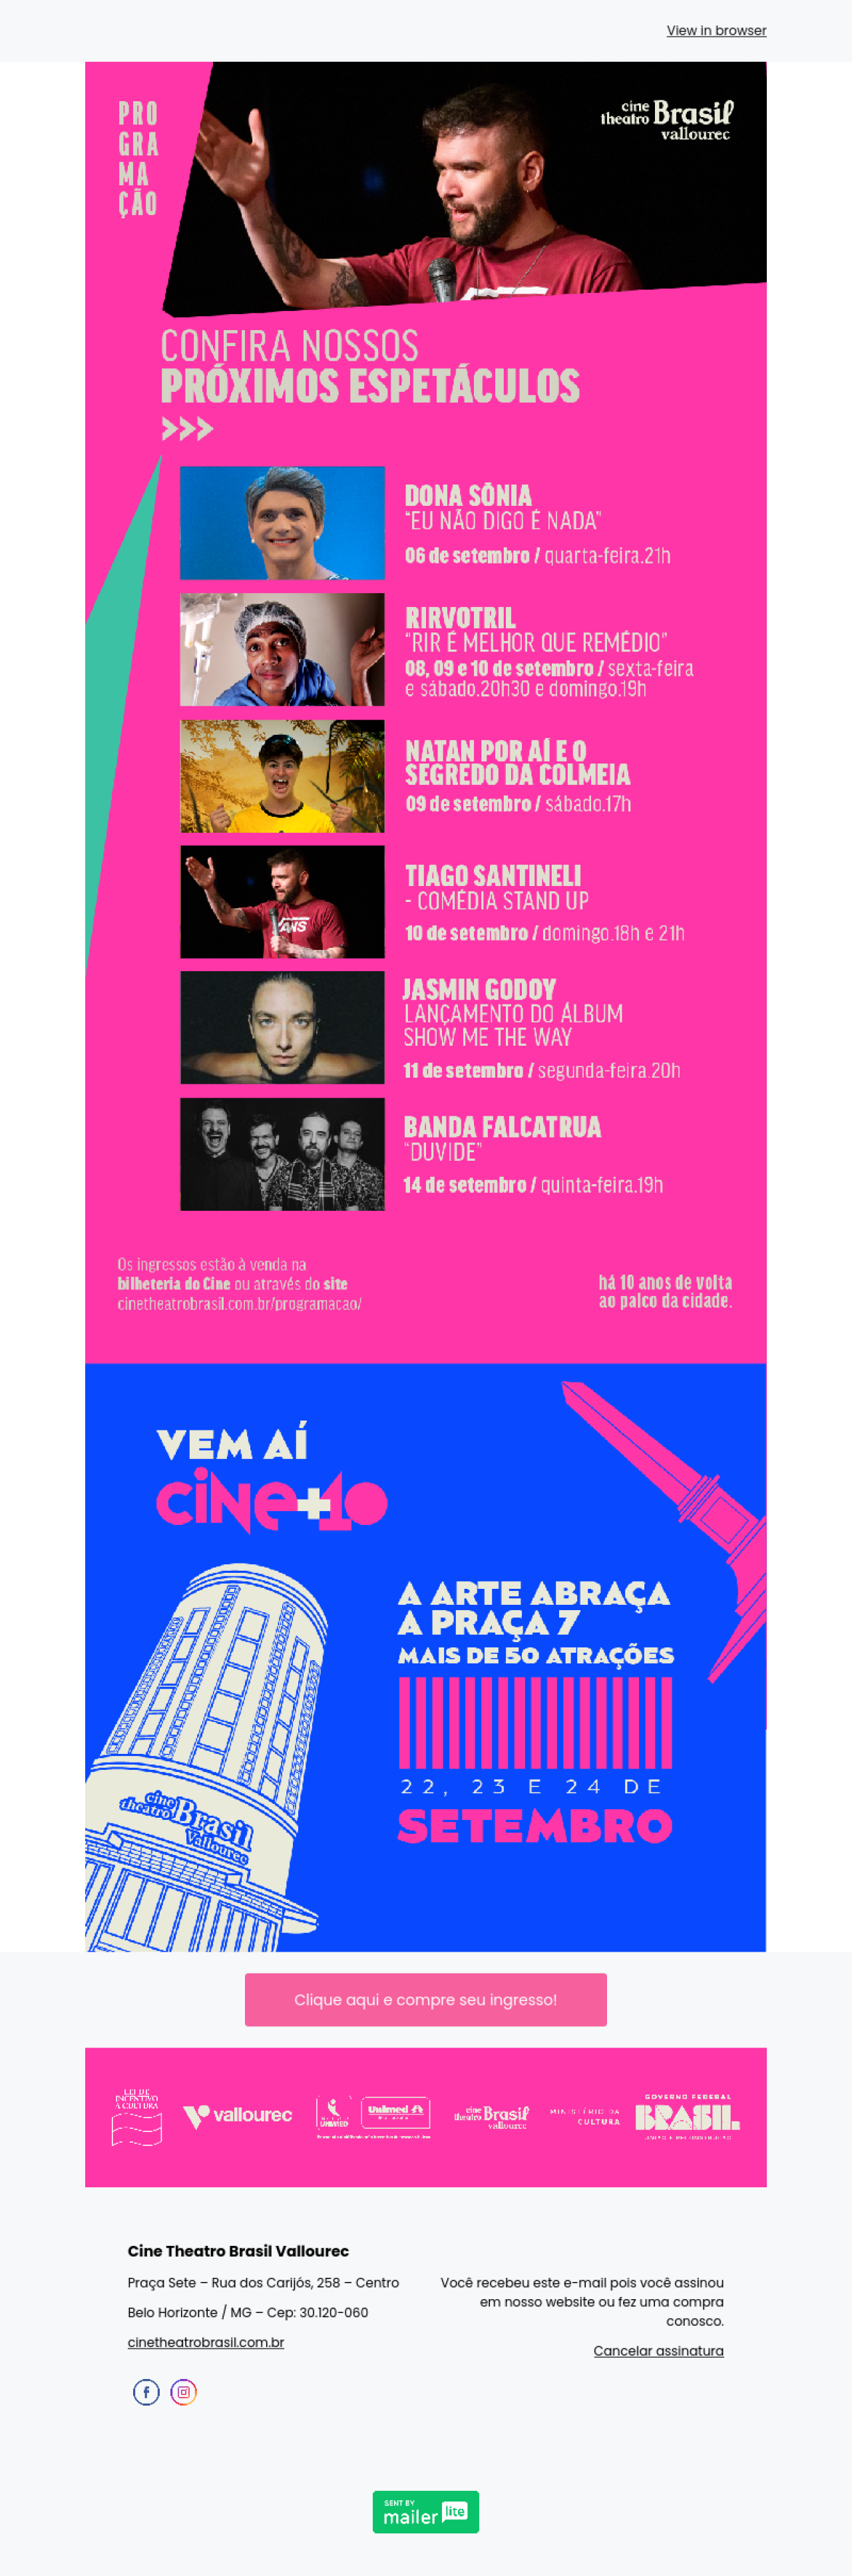 Cine Theatro Brasil Vallourec example - Made with MailerLite